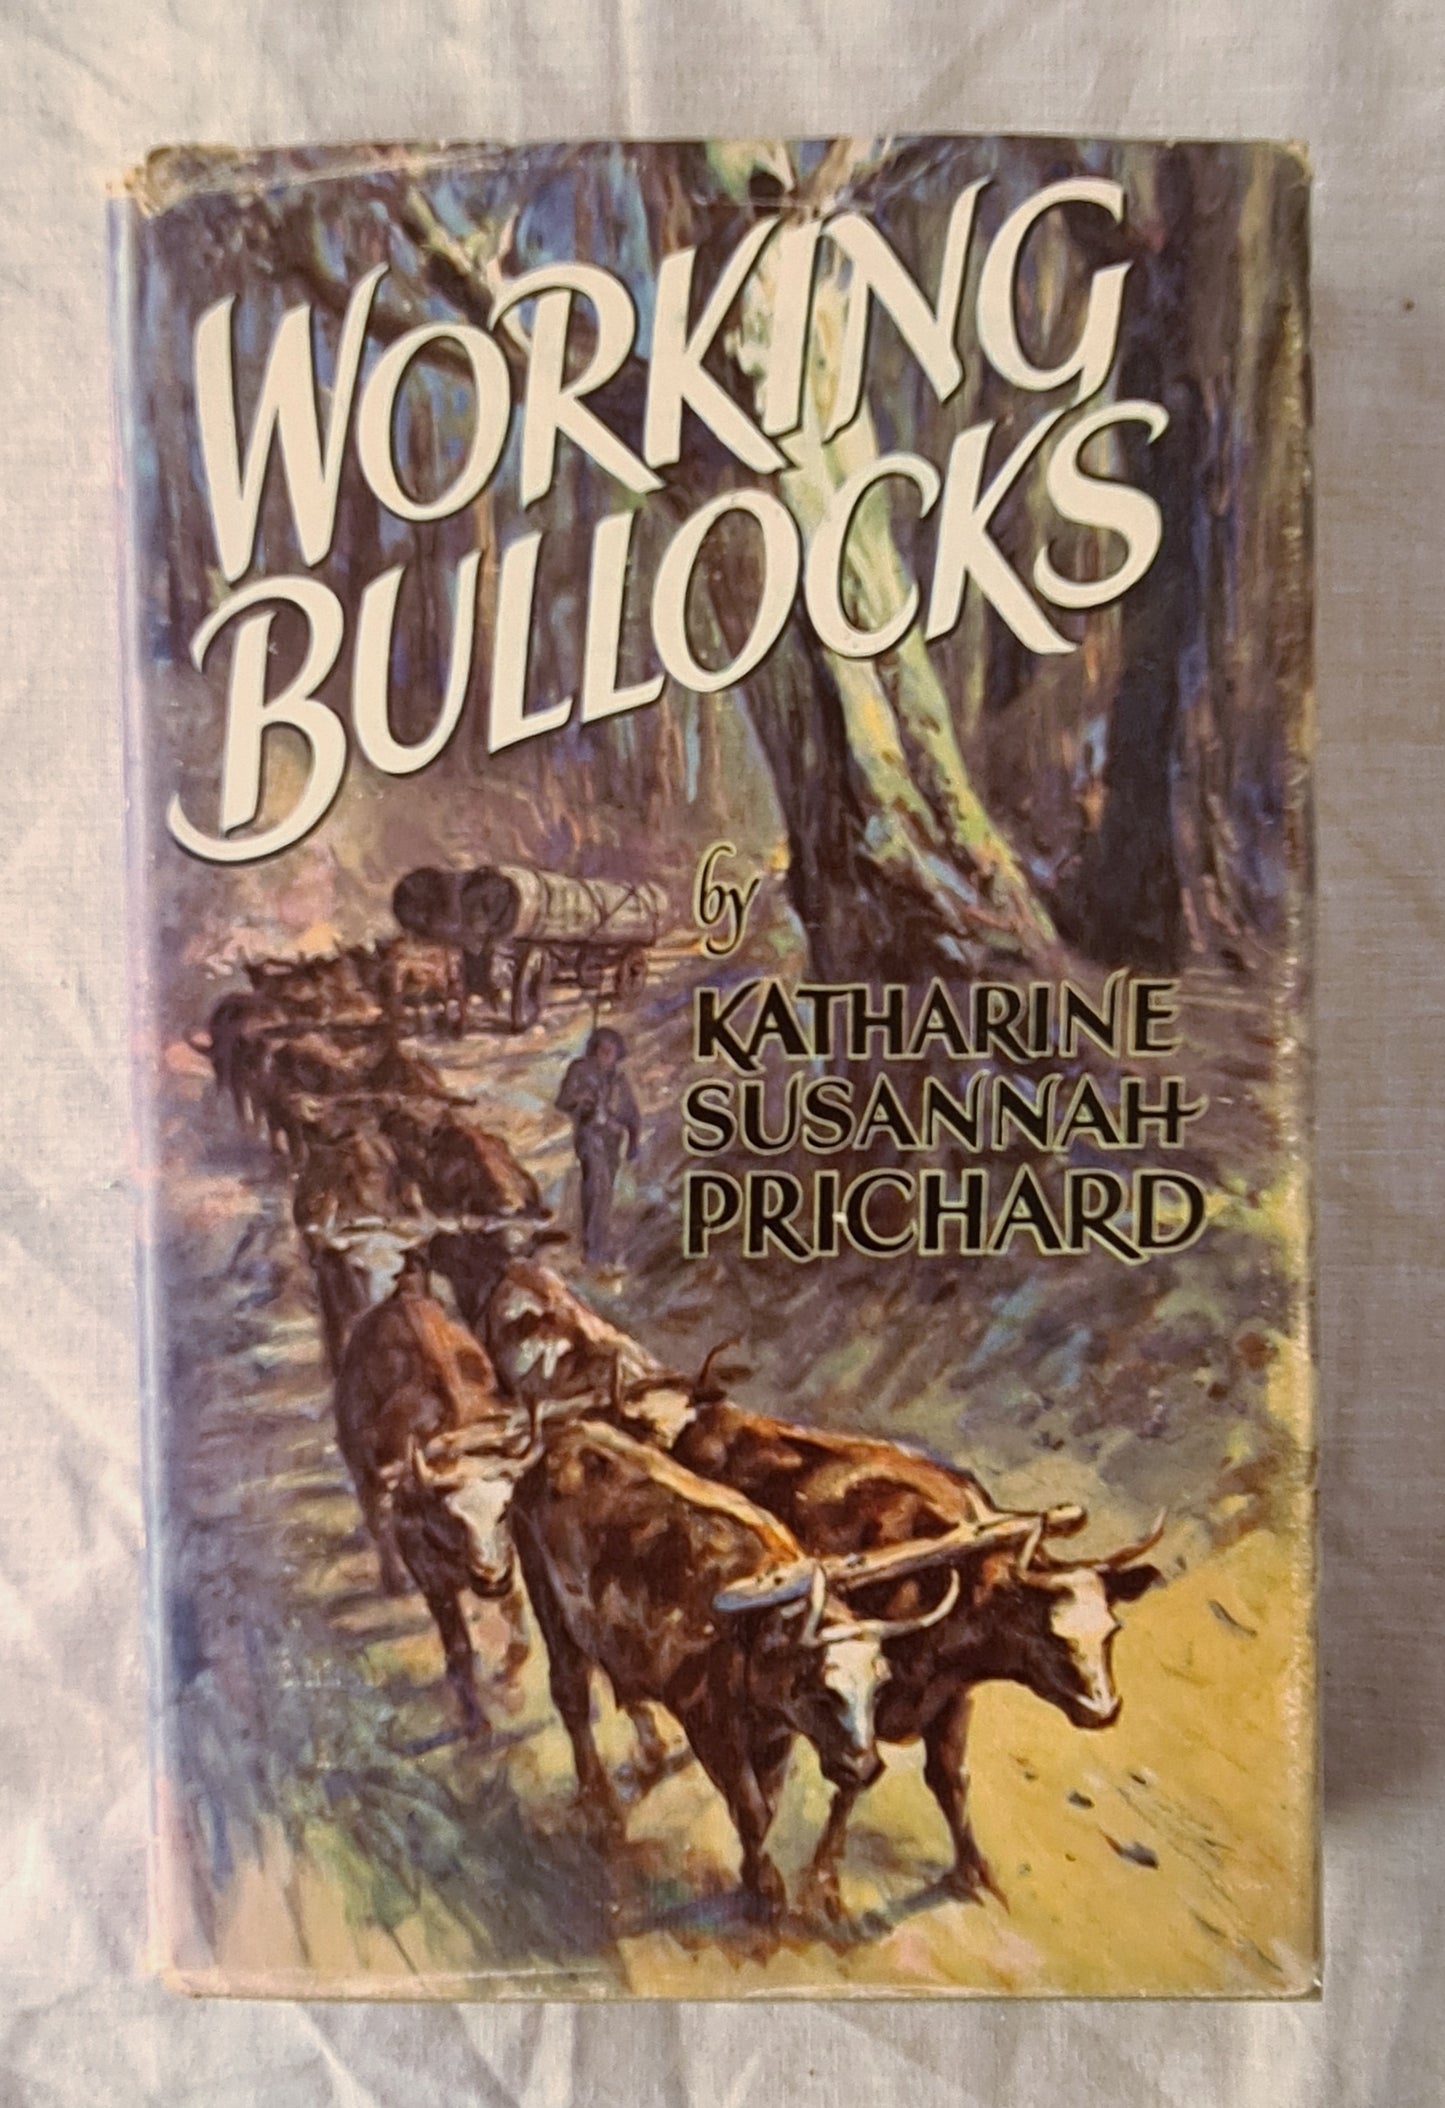 Working Bullocks by Katharine Susannah Prichard